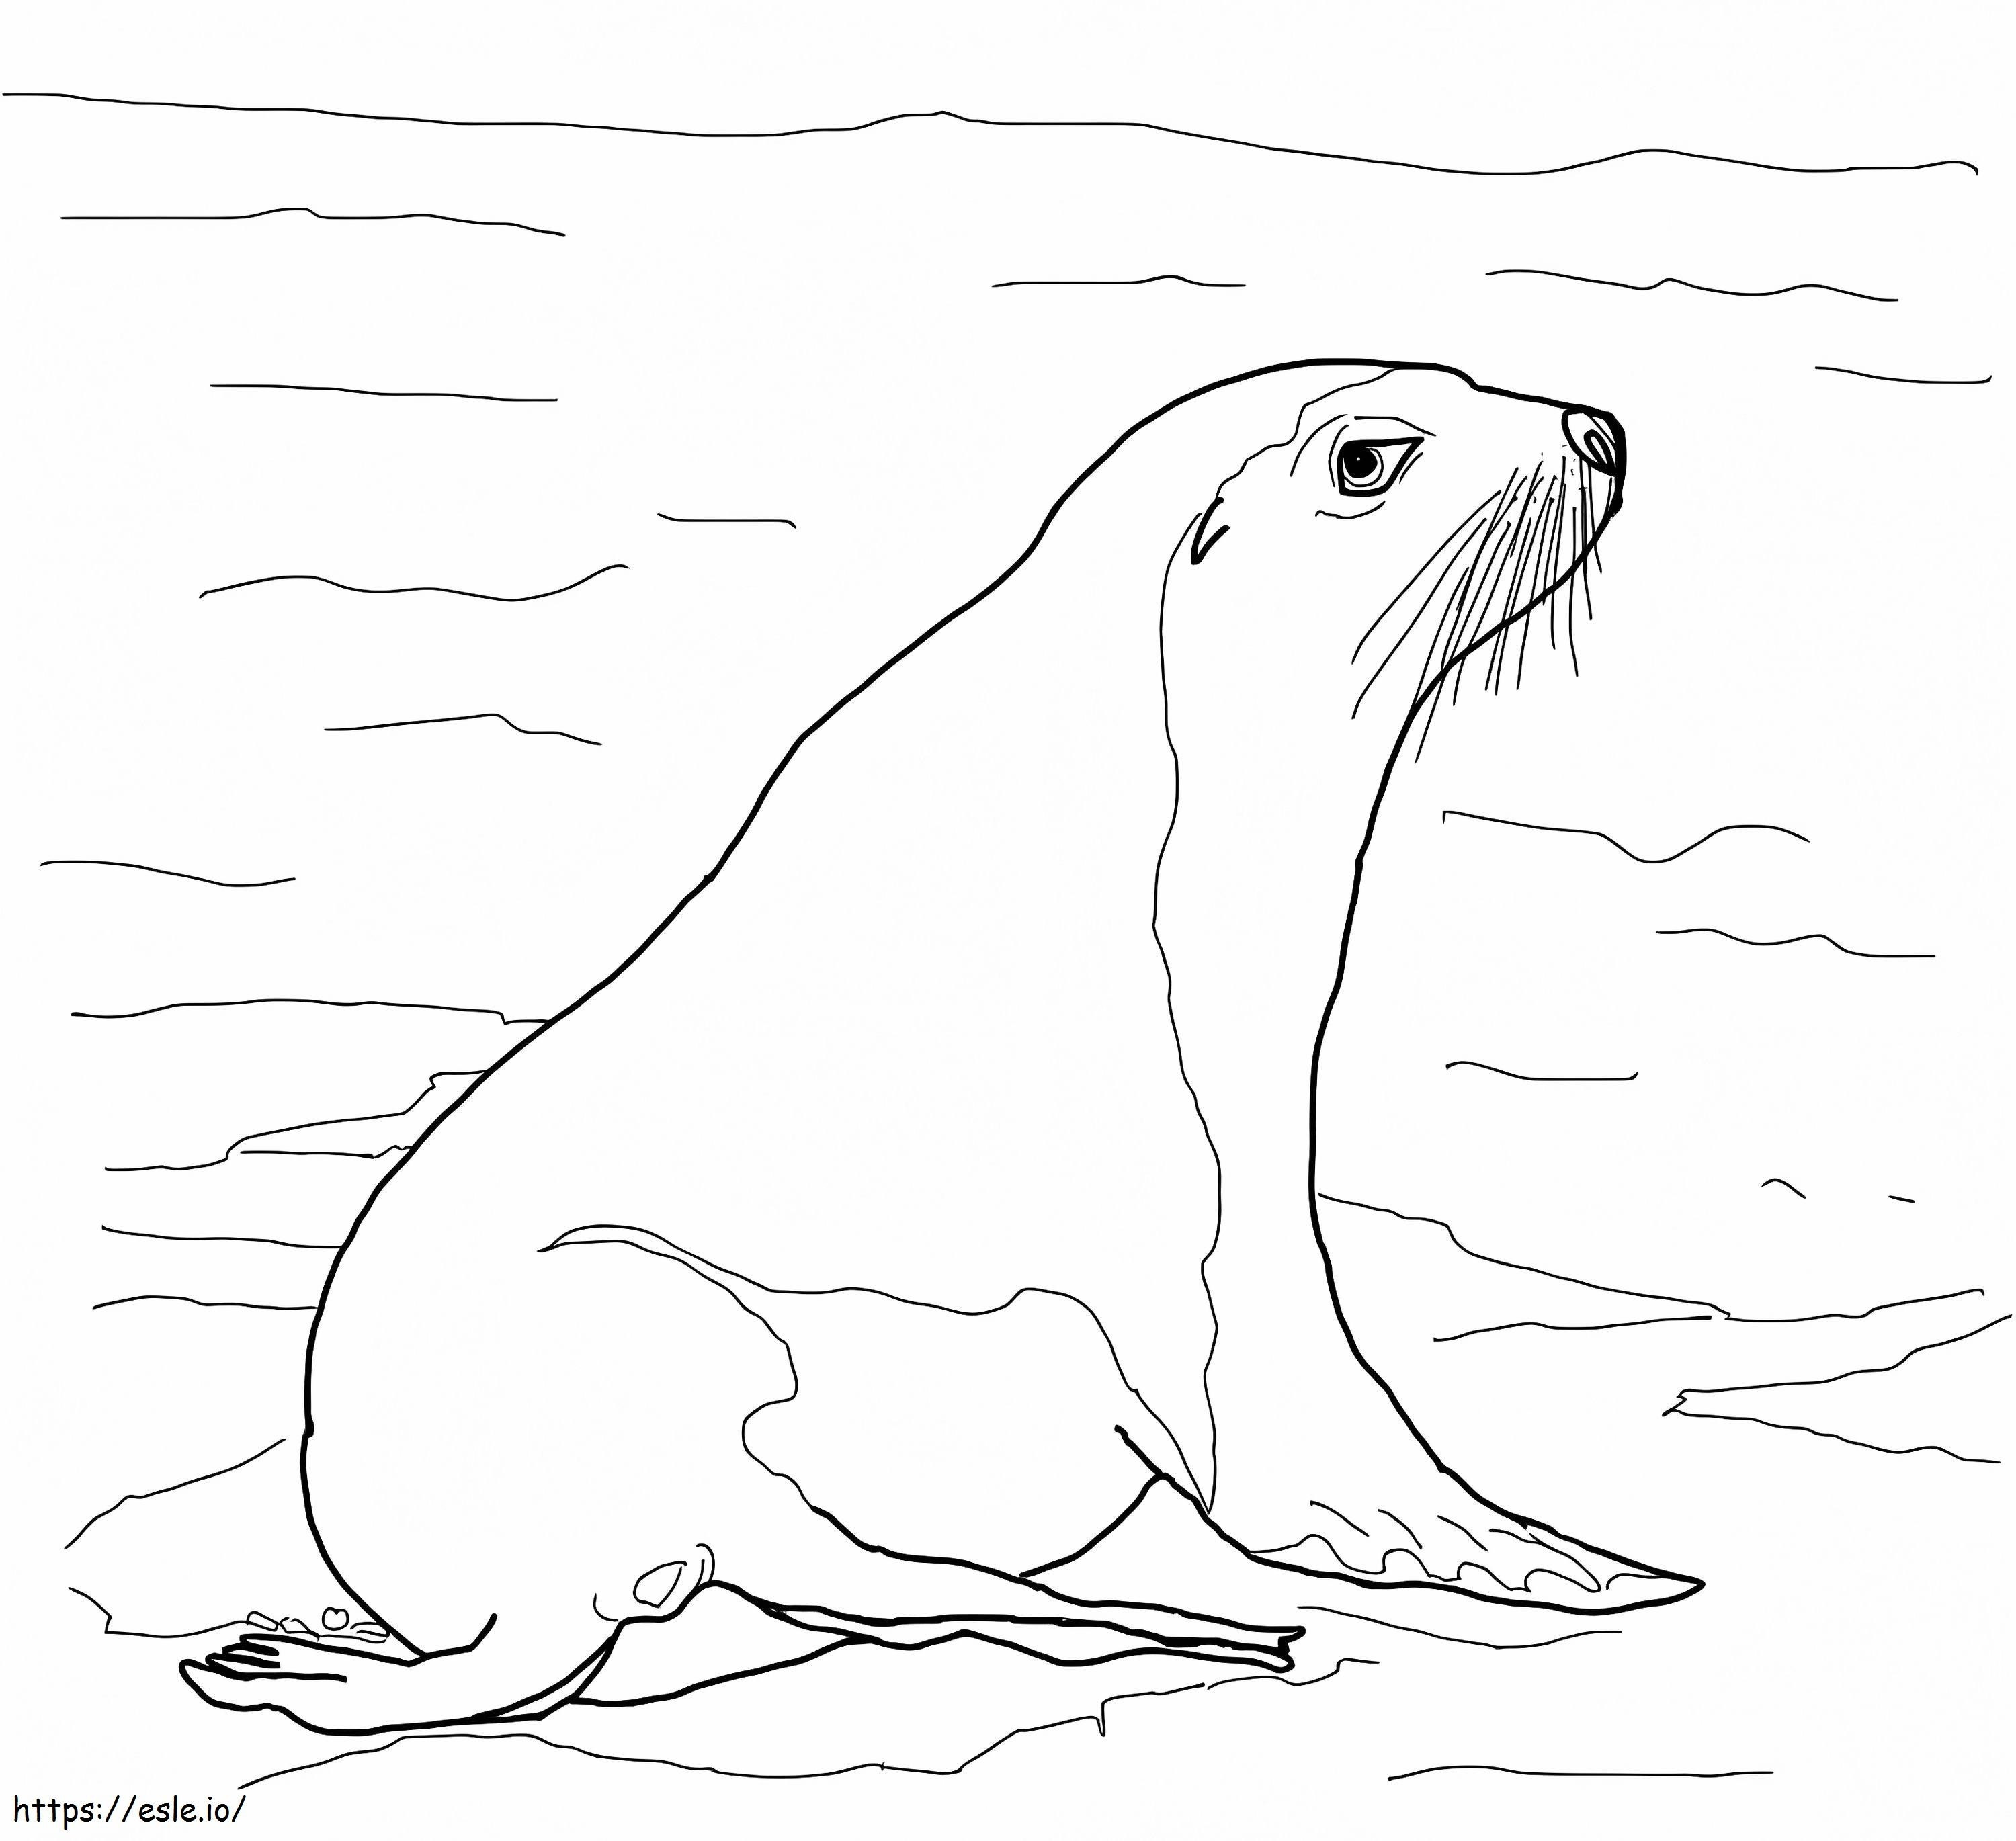 Australian Sea Lion coloring page